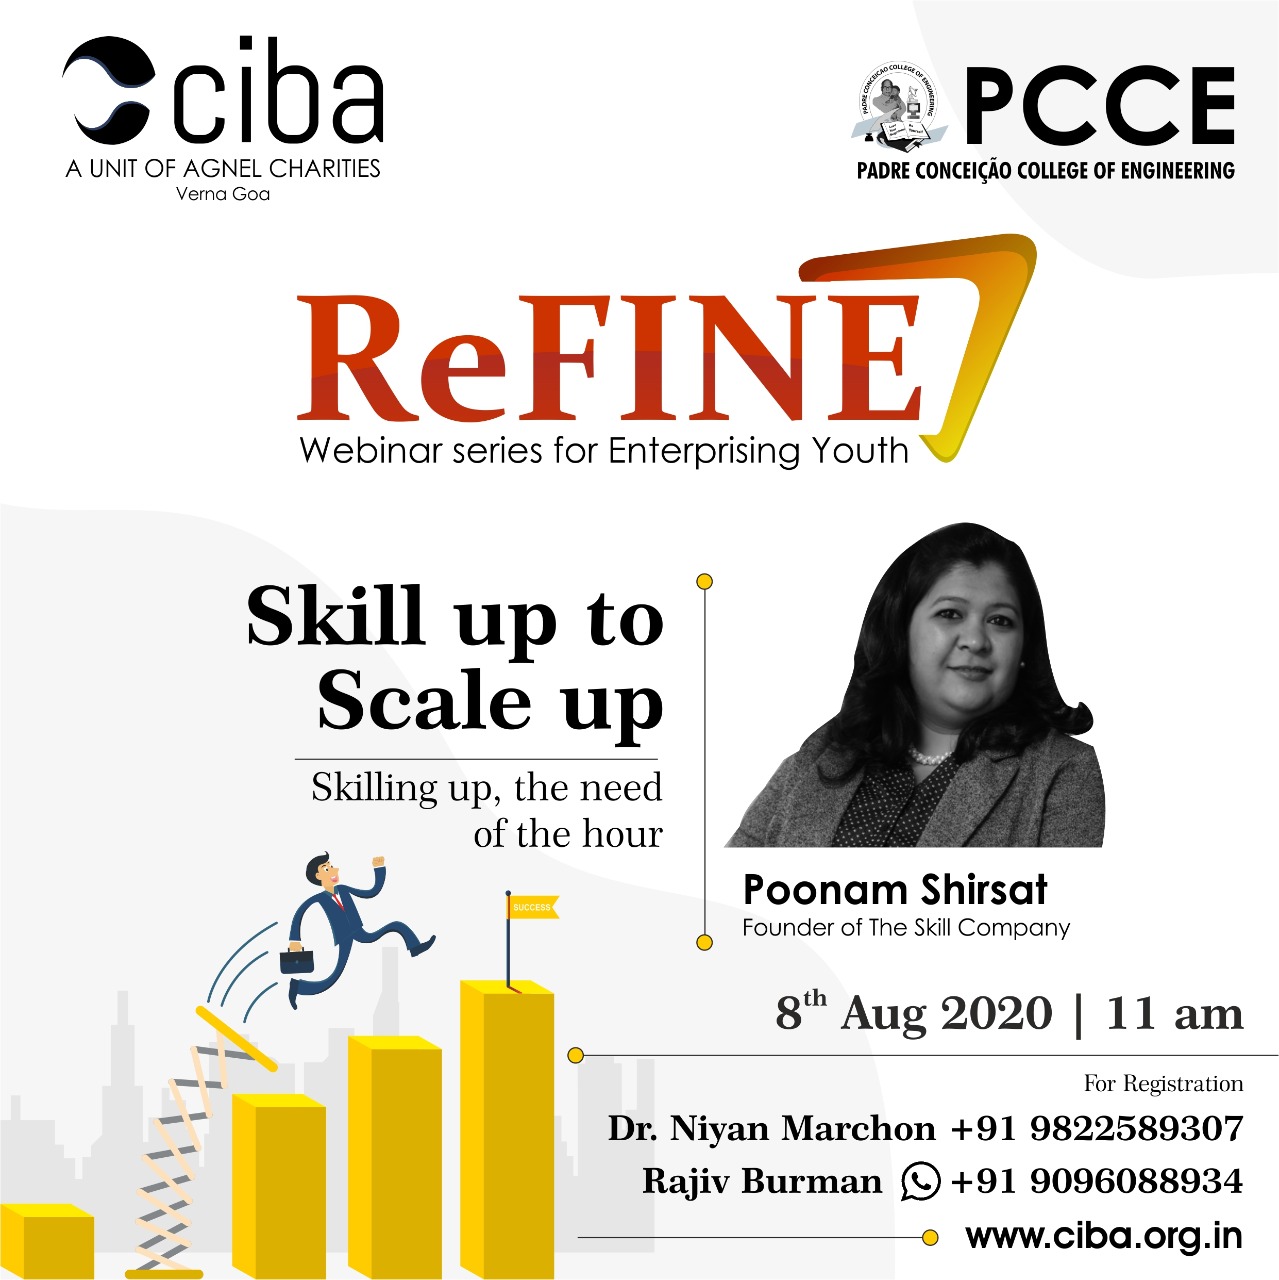 ciba-ReFINE- Skill up to Scale up